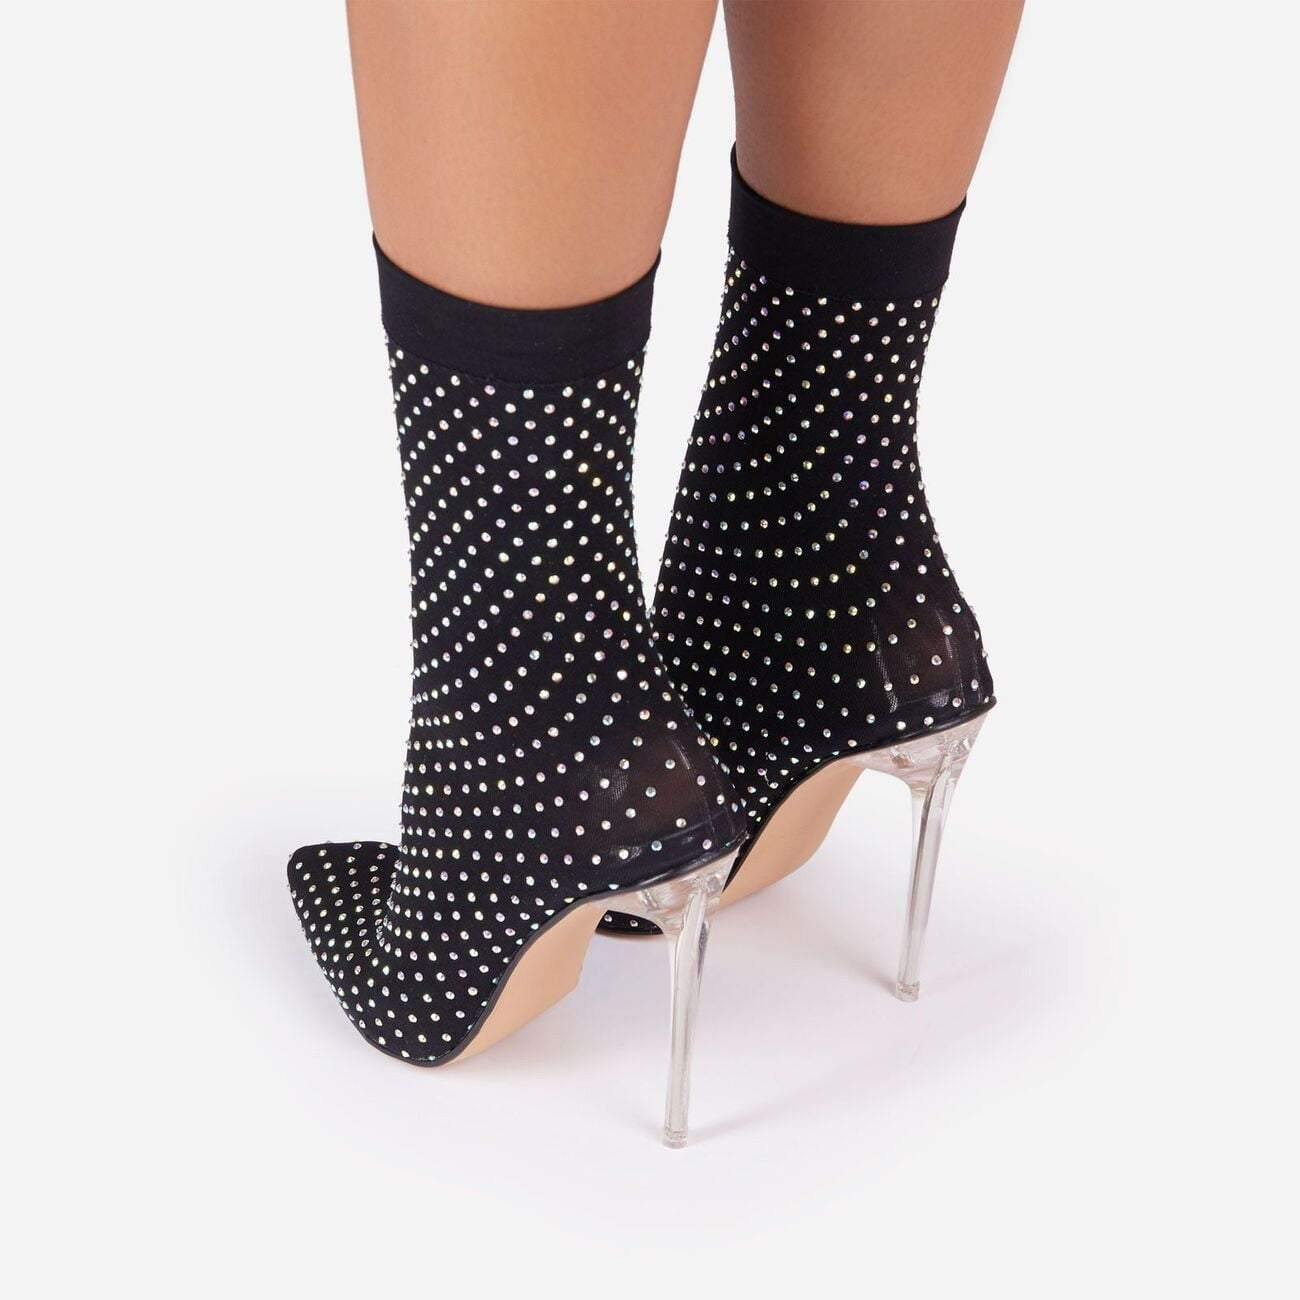 Fashionsarah.com Perspex Ankle Sock Boot